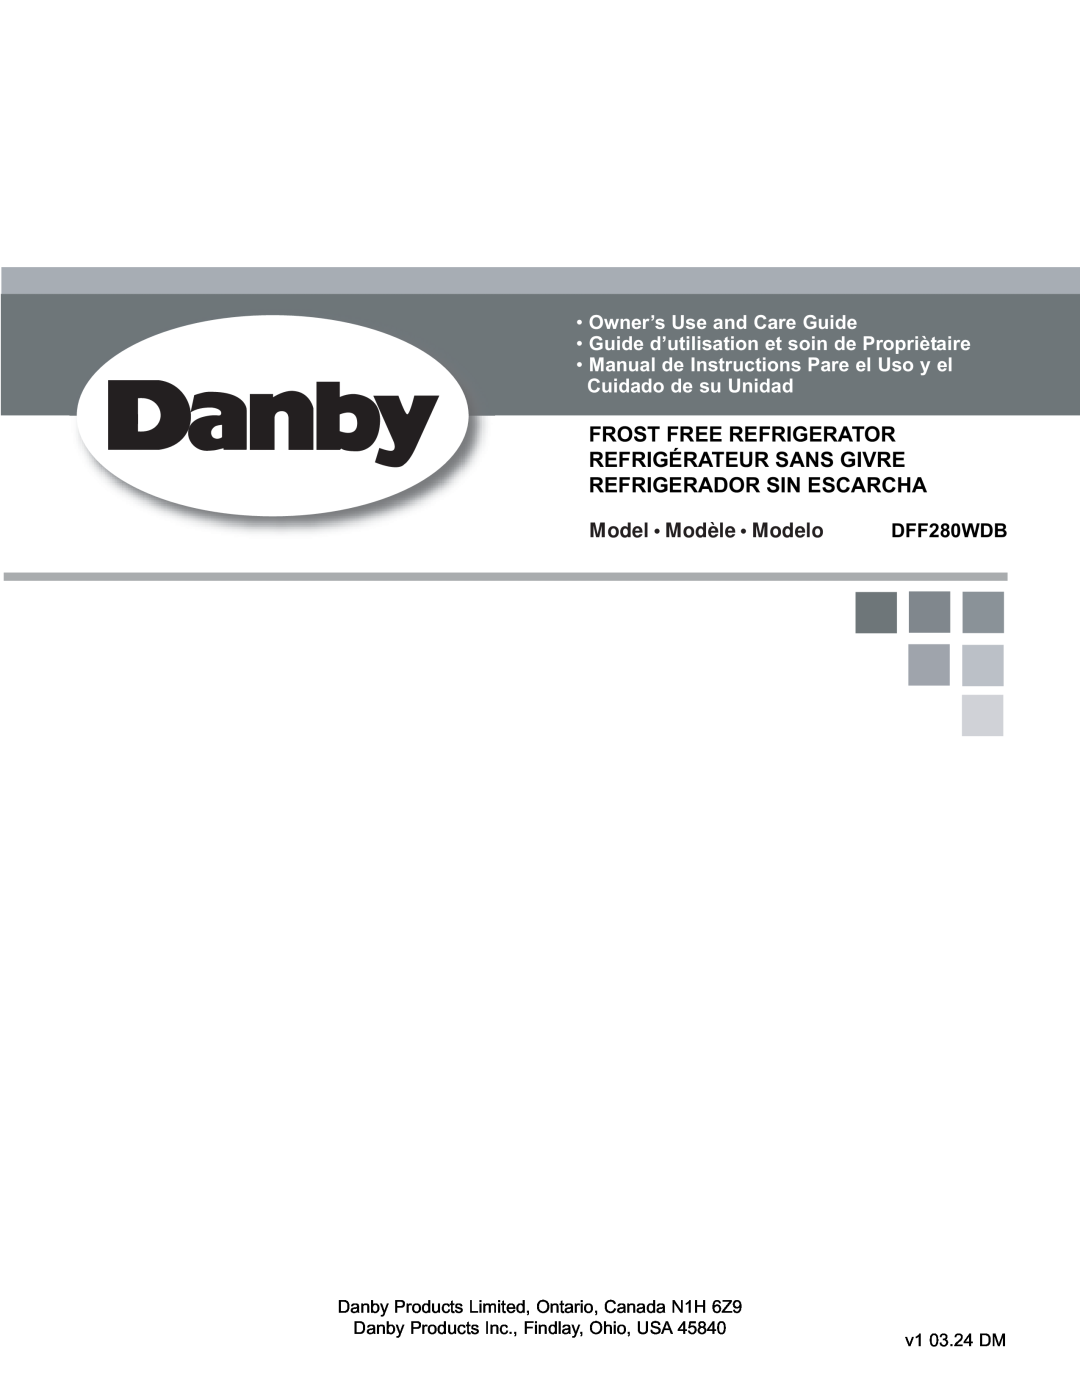 Danby DFF280WDB manual Frost Free Refrigerator Refrigérateur Sans Givre, Refrigerador Sin Escarcha, Model Modèle Modelo 